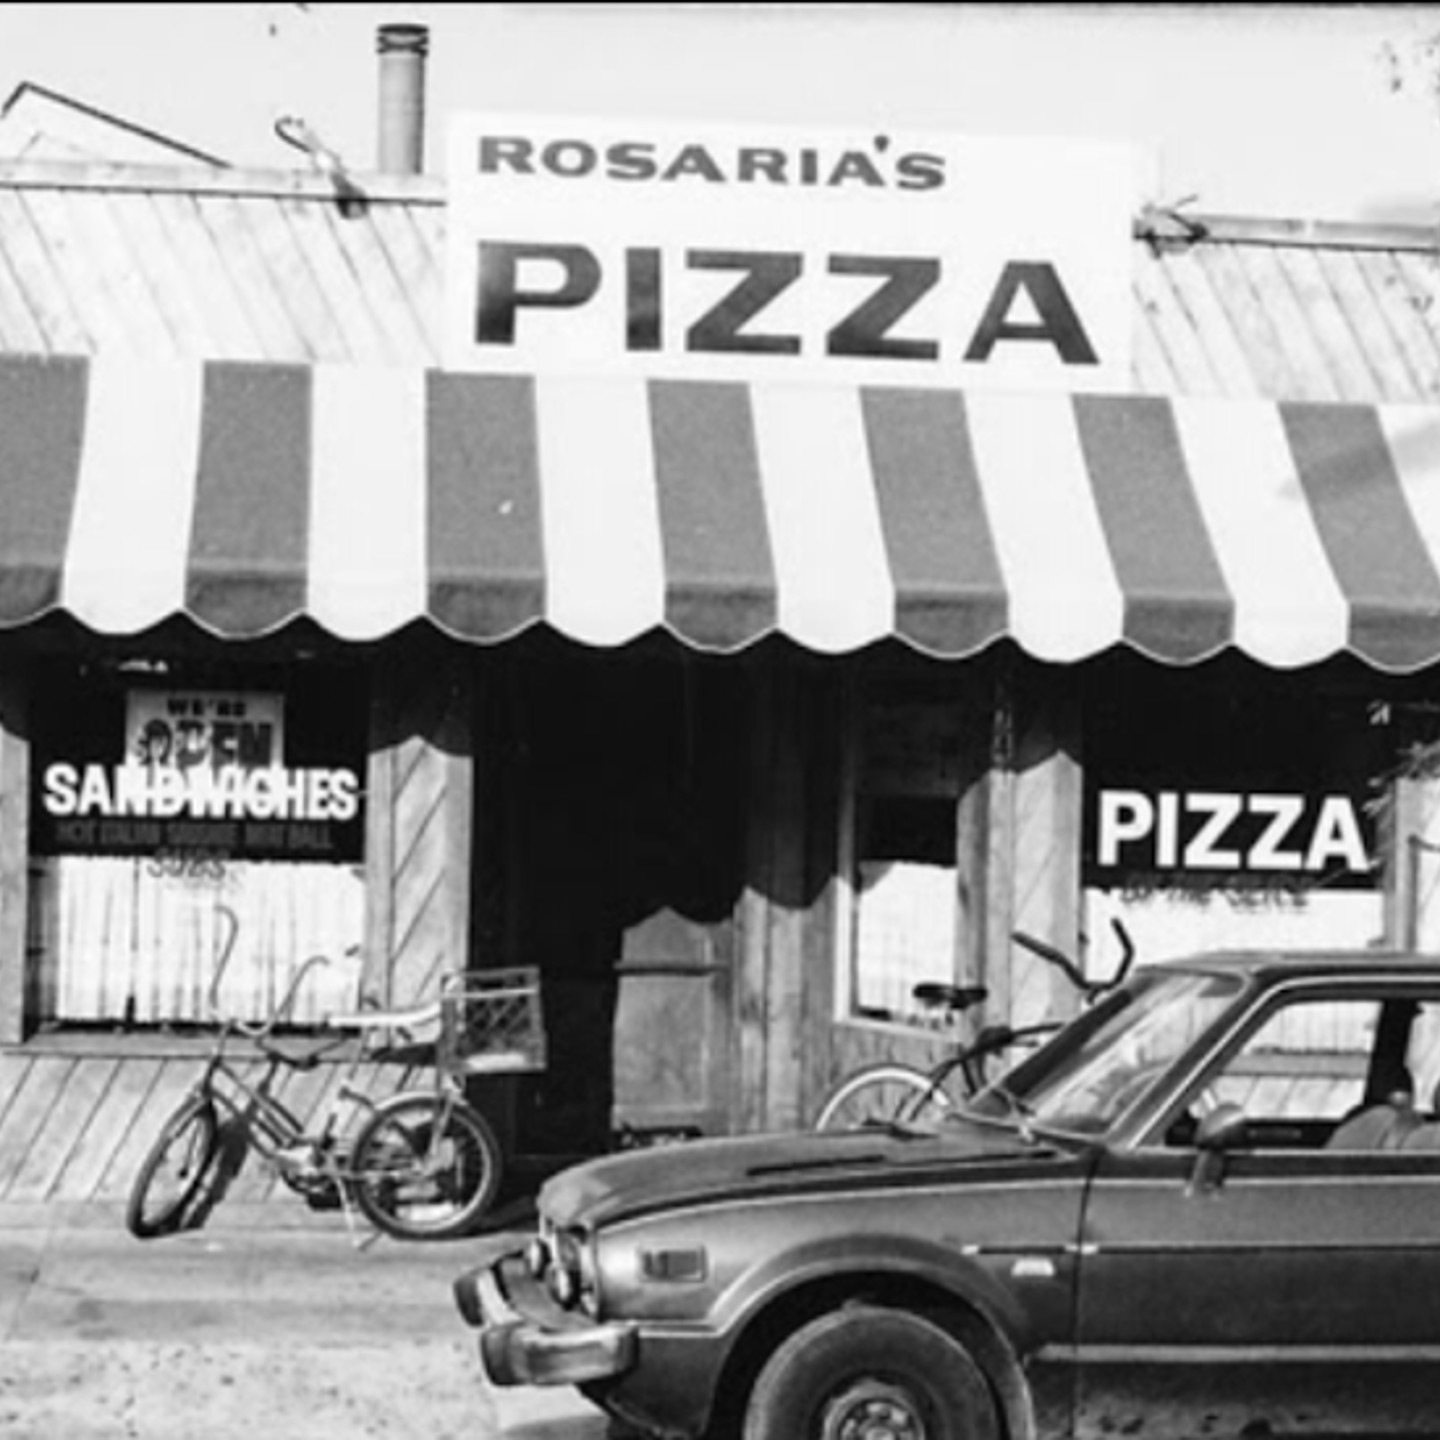 Rosaria's Pizza: Since 1980, A Mission Beach Icon